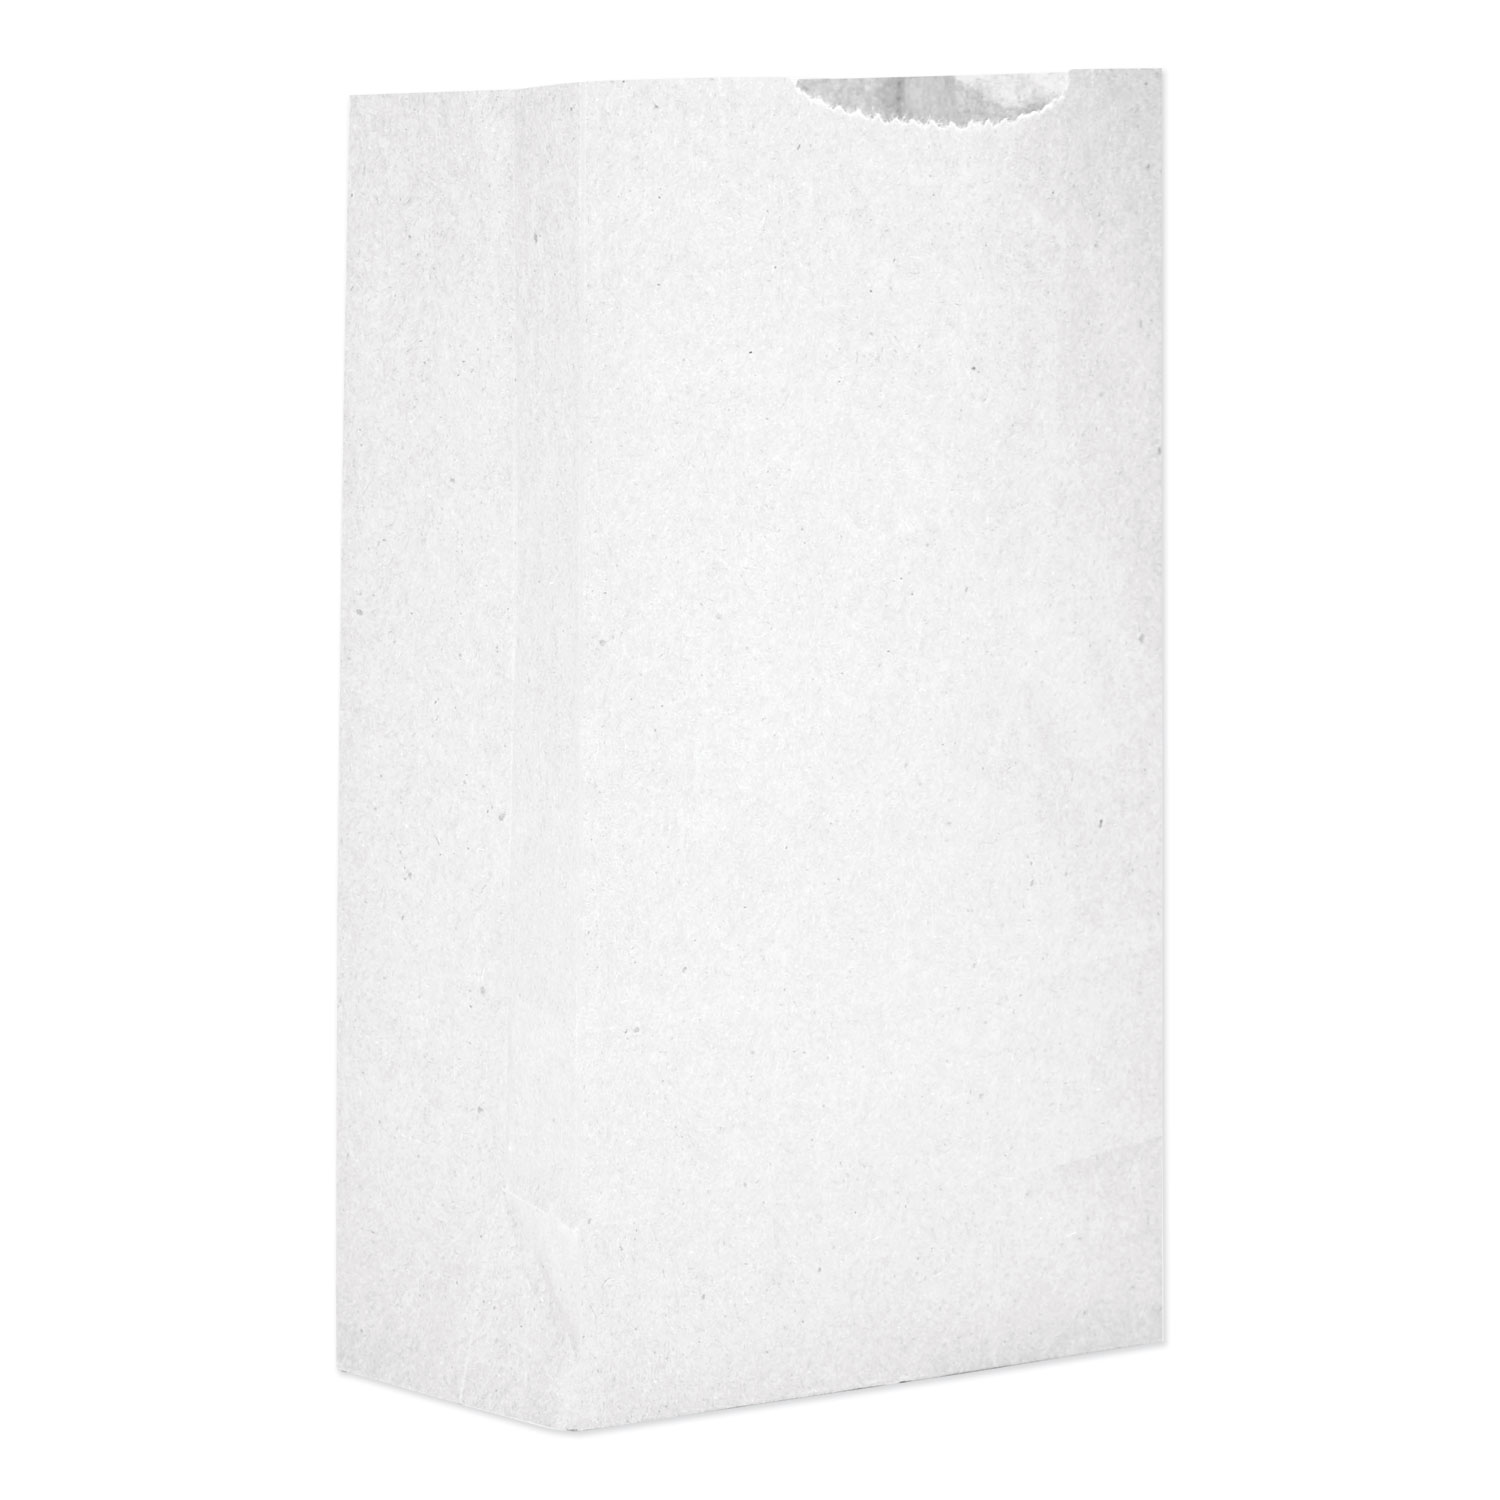 Grocery Paper Bags, 57 lbs Capacity, #8, 6.13w x 4.17d x 12.44h, Kraft, 500 Bags